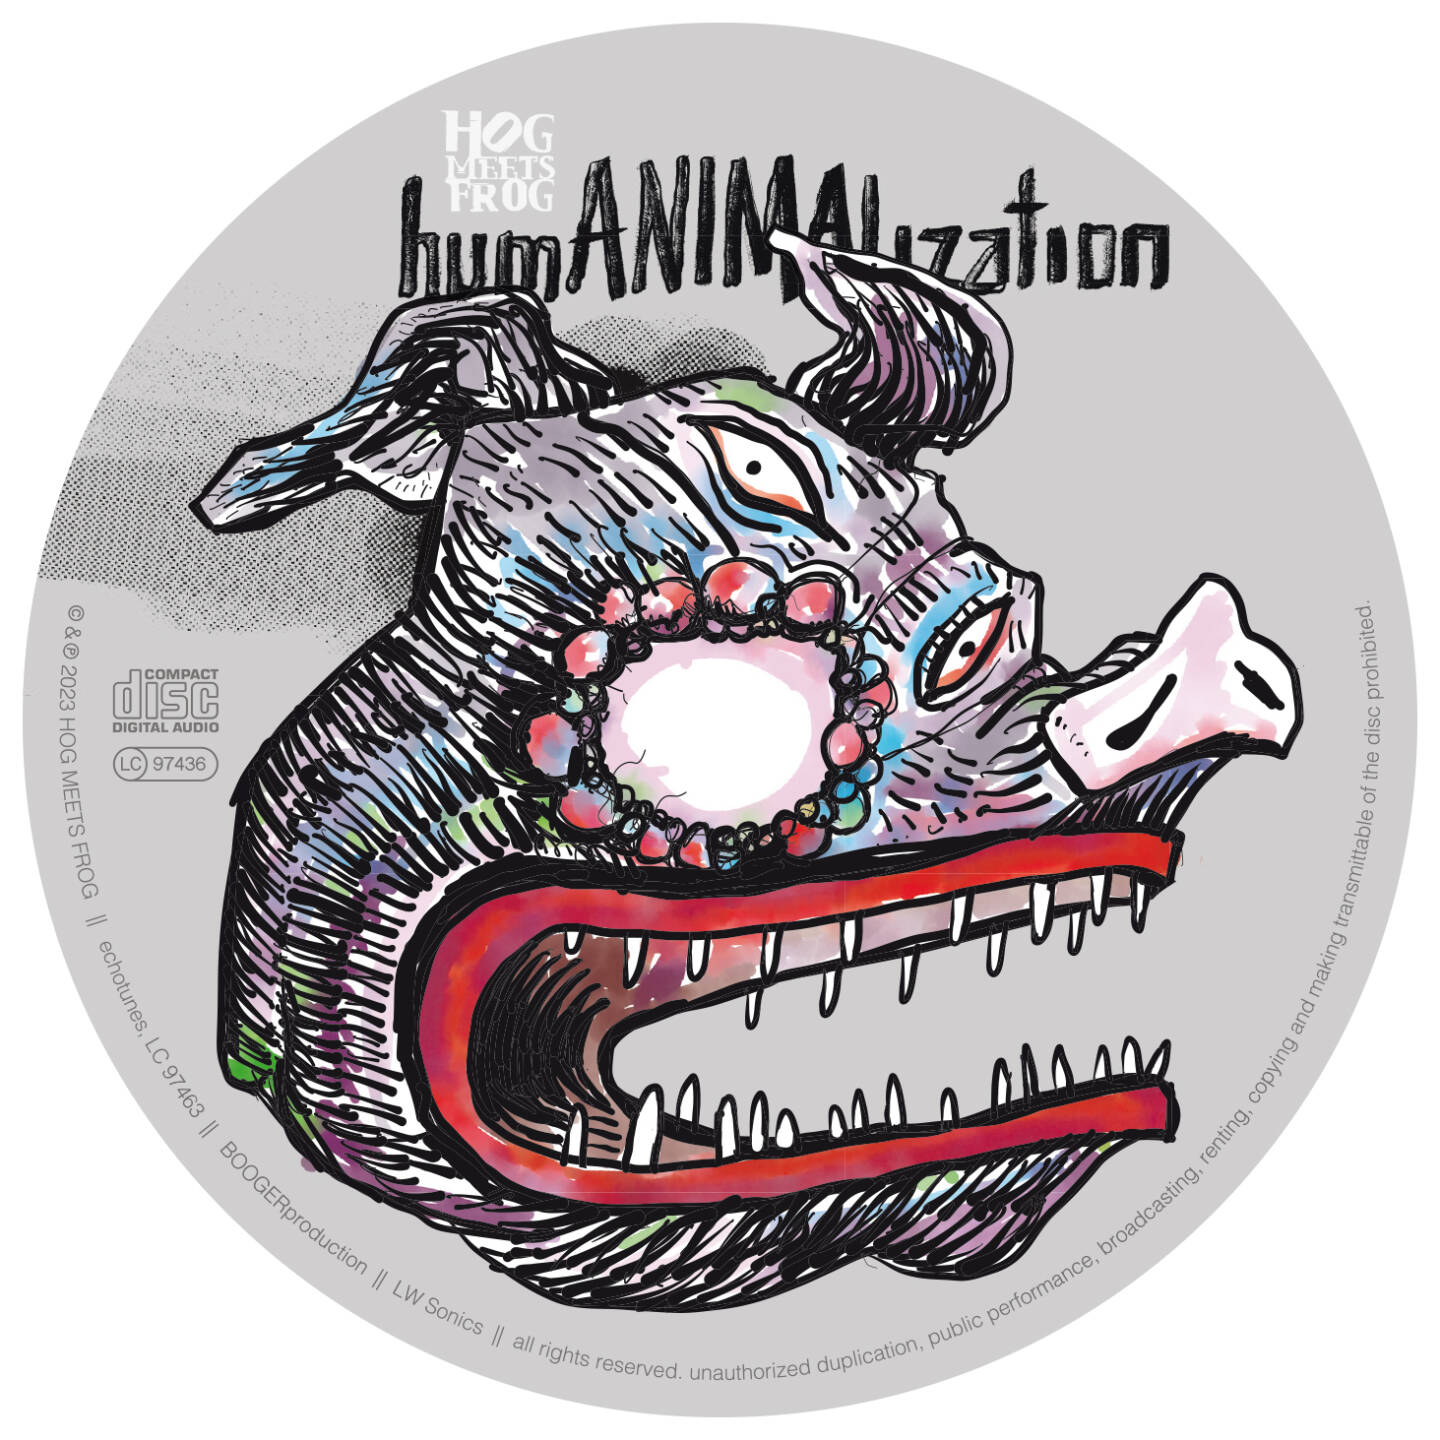 Hog Meets Frog premieres EP humANIMALization